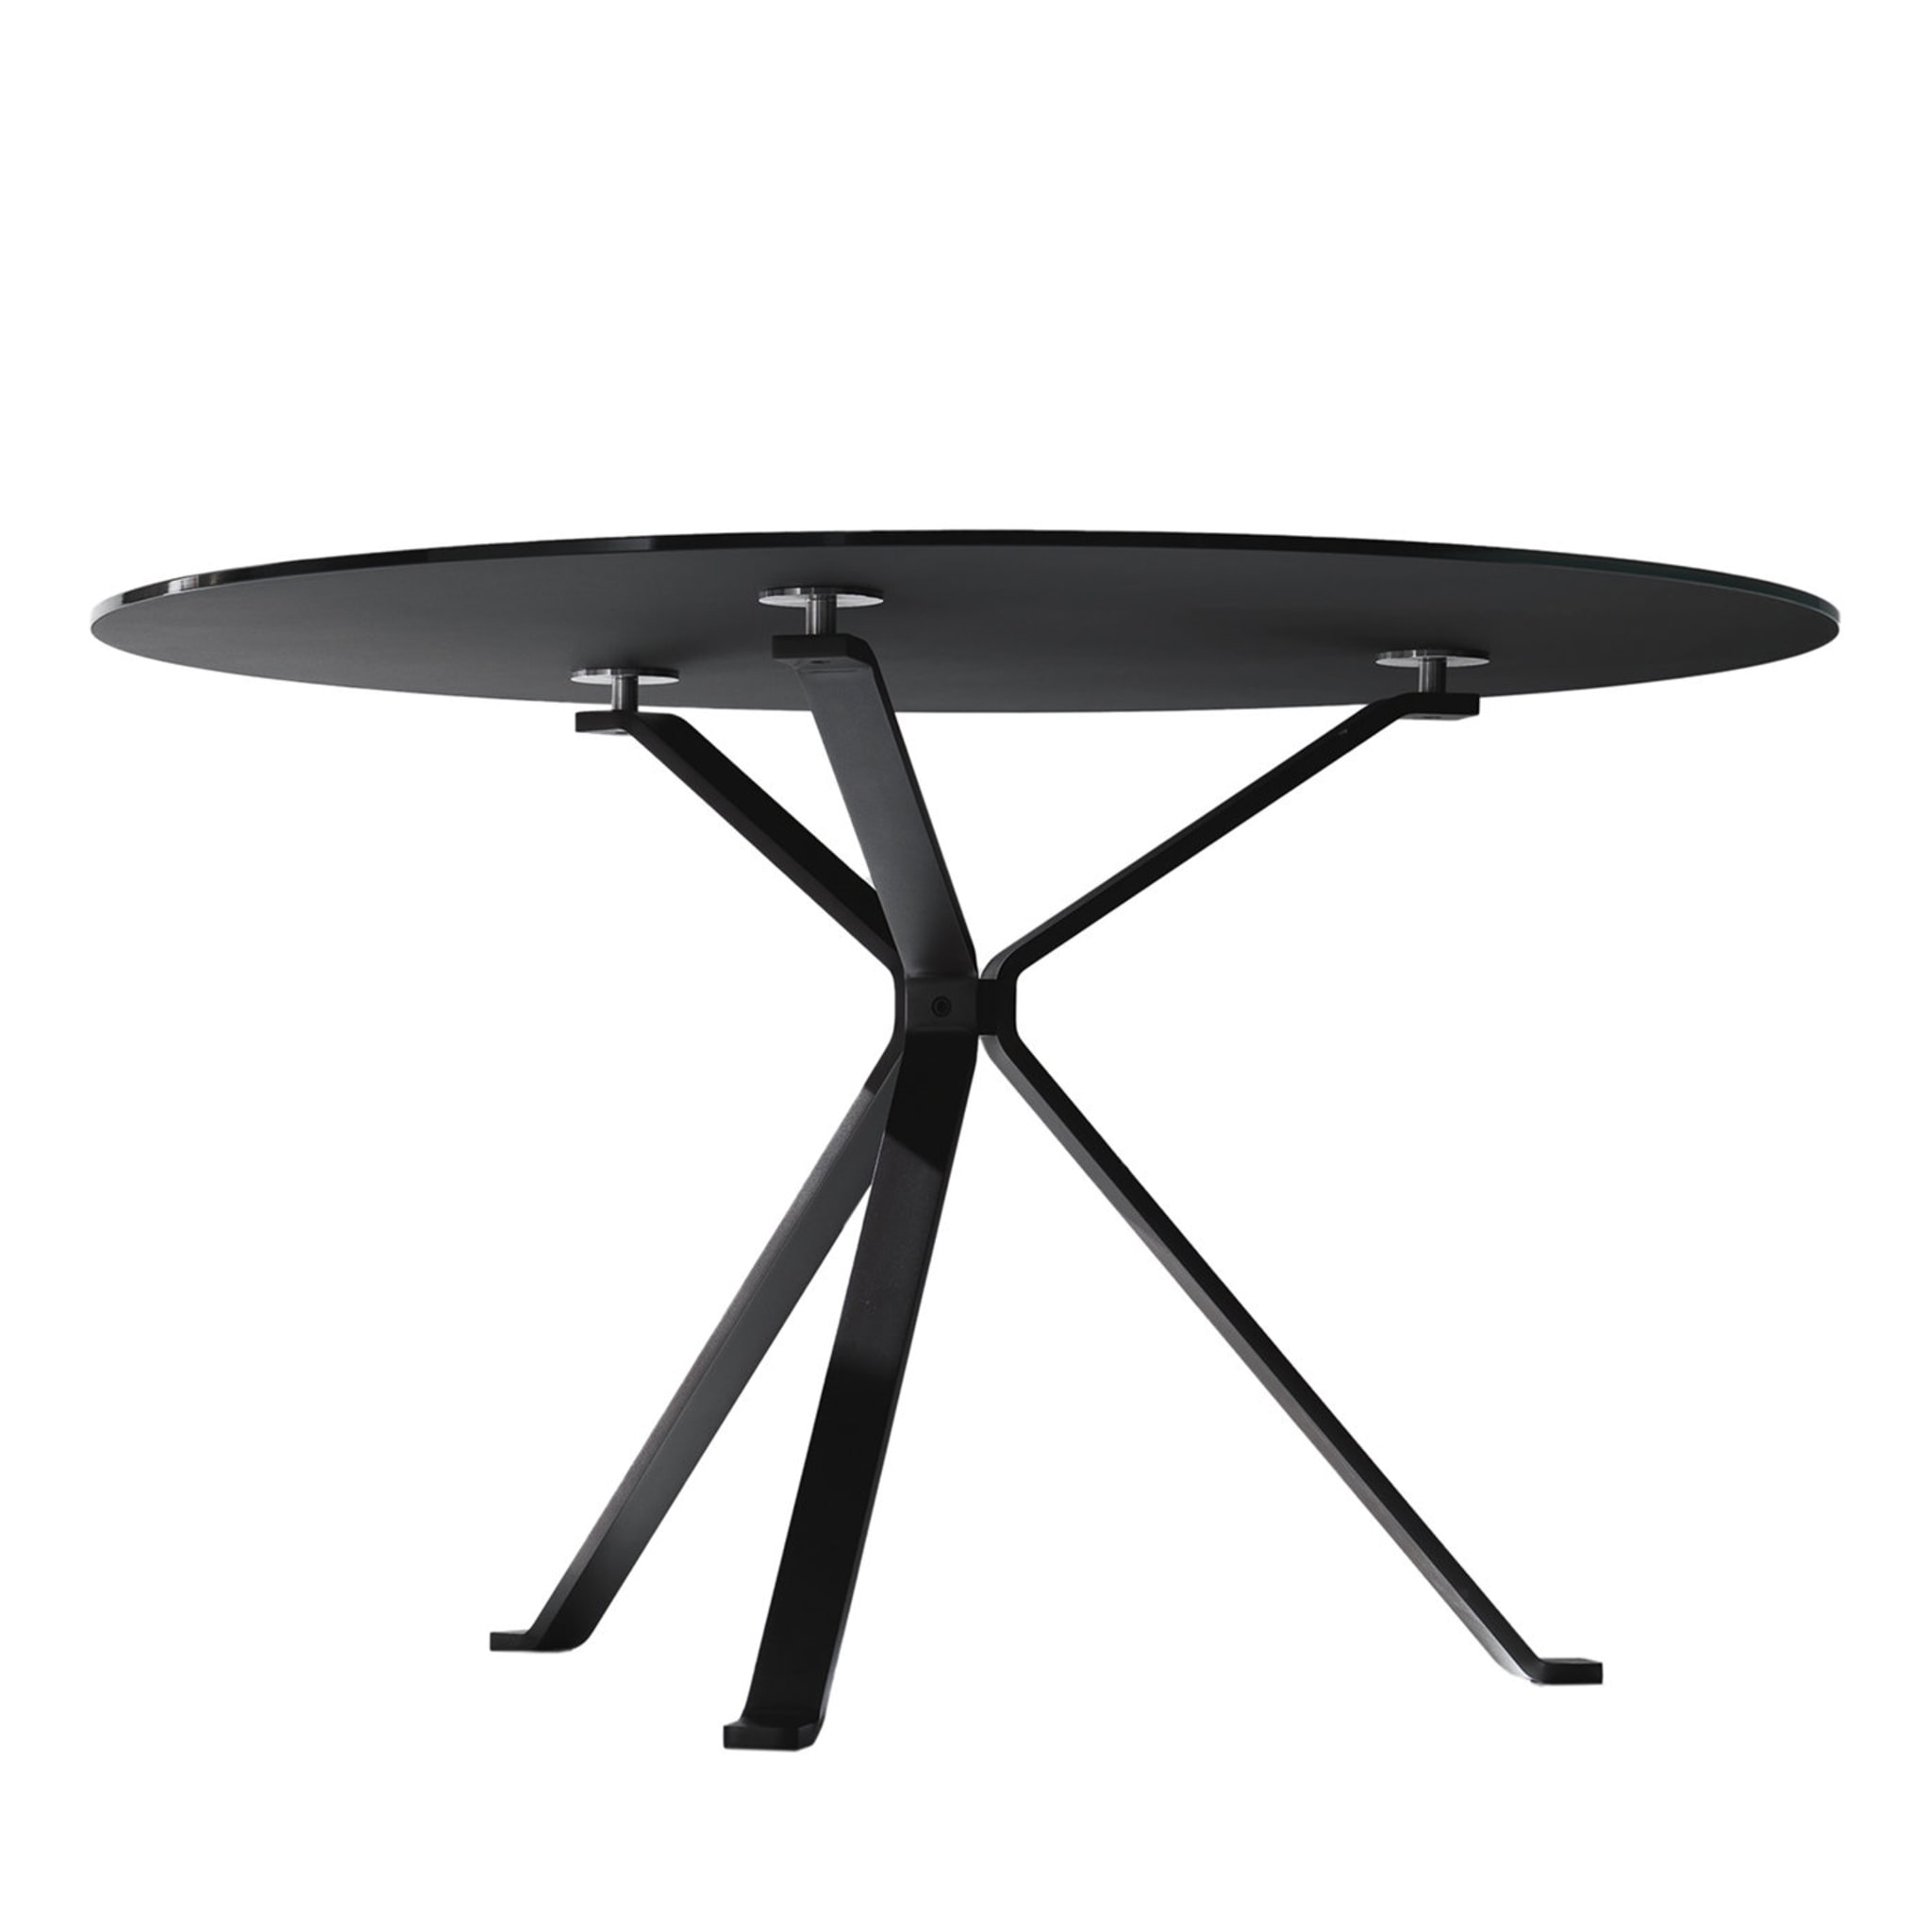 Revo Black 120 Coffee Table by Giovanni Giacobone + Massimo Roj Progetto CMR - Main view